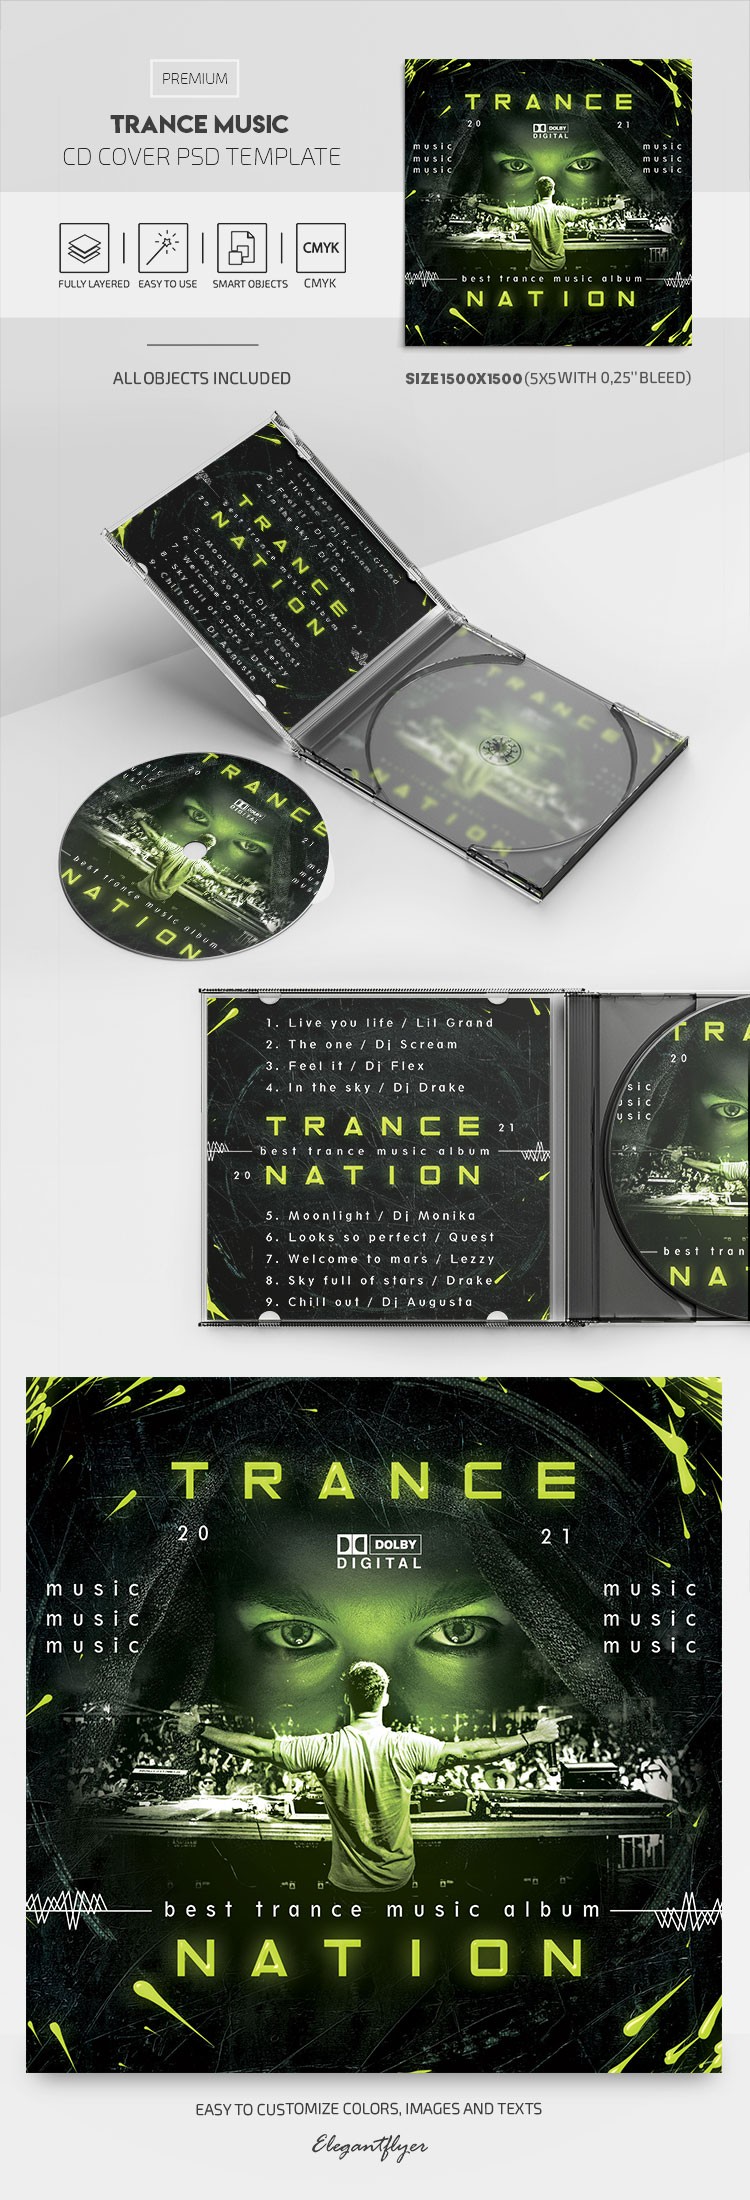 Trance Nation CD Cover --> Trance Nation CD Cover by ElegantFlyer